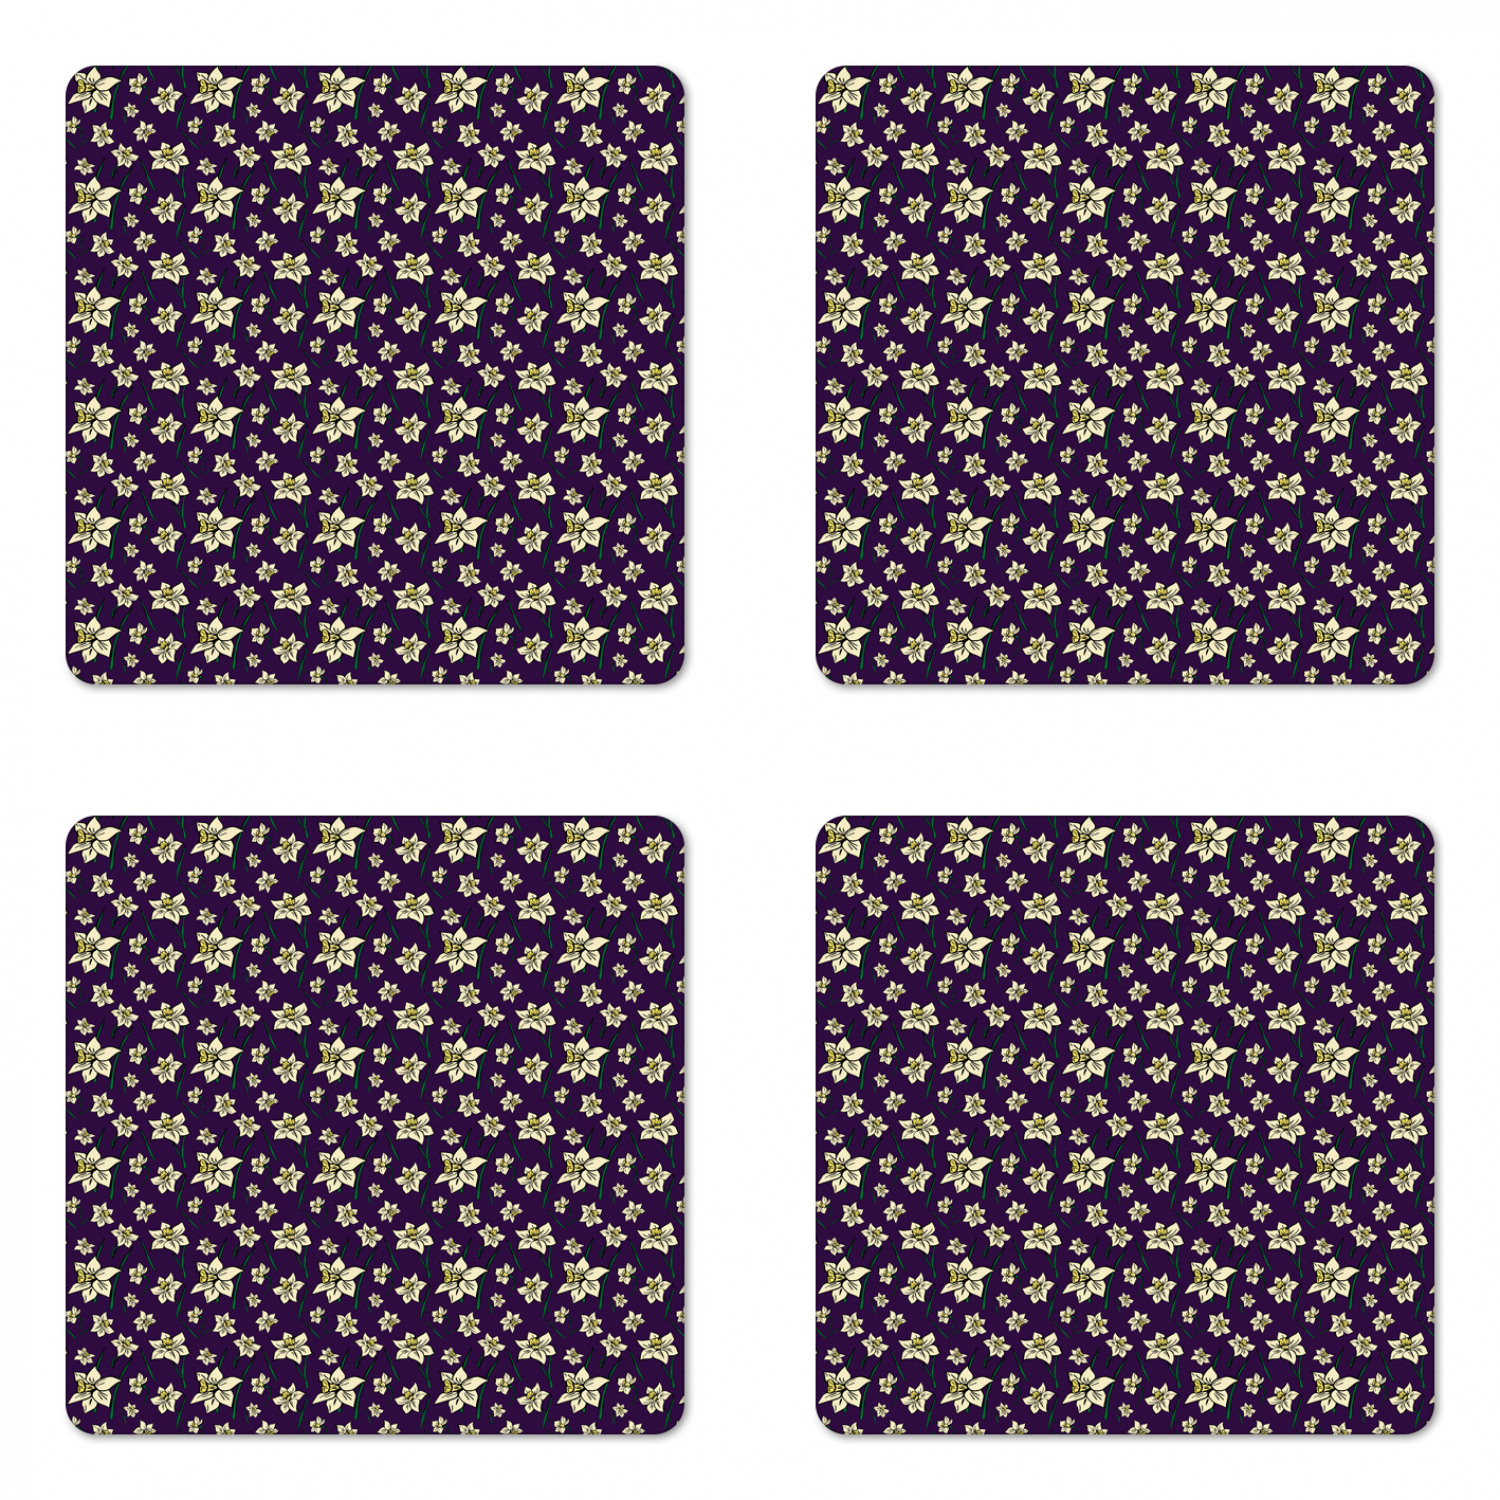 Floral Coaster Set of 4, Repeating Cartoonish Design Daffodil Flowers Botanical Art, Square Hardboard Gloss Coasters, Standard Size, Dark Purple Cream, by Ambesonne - image 1 of 2